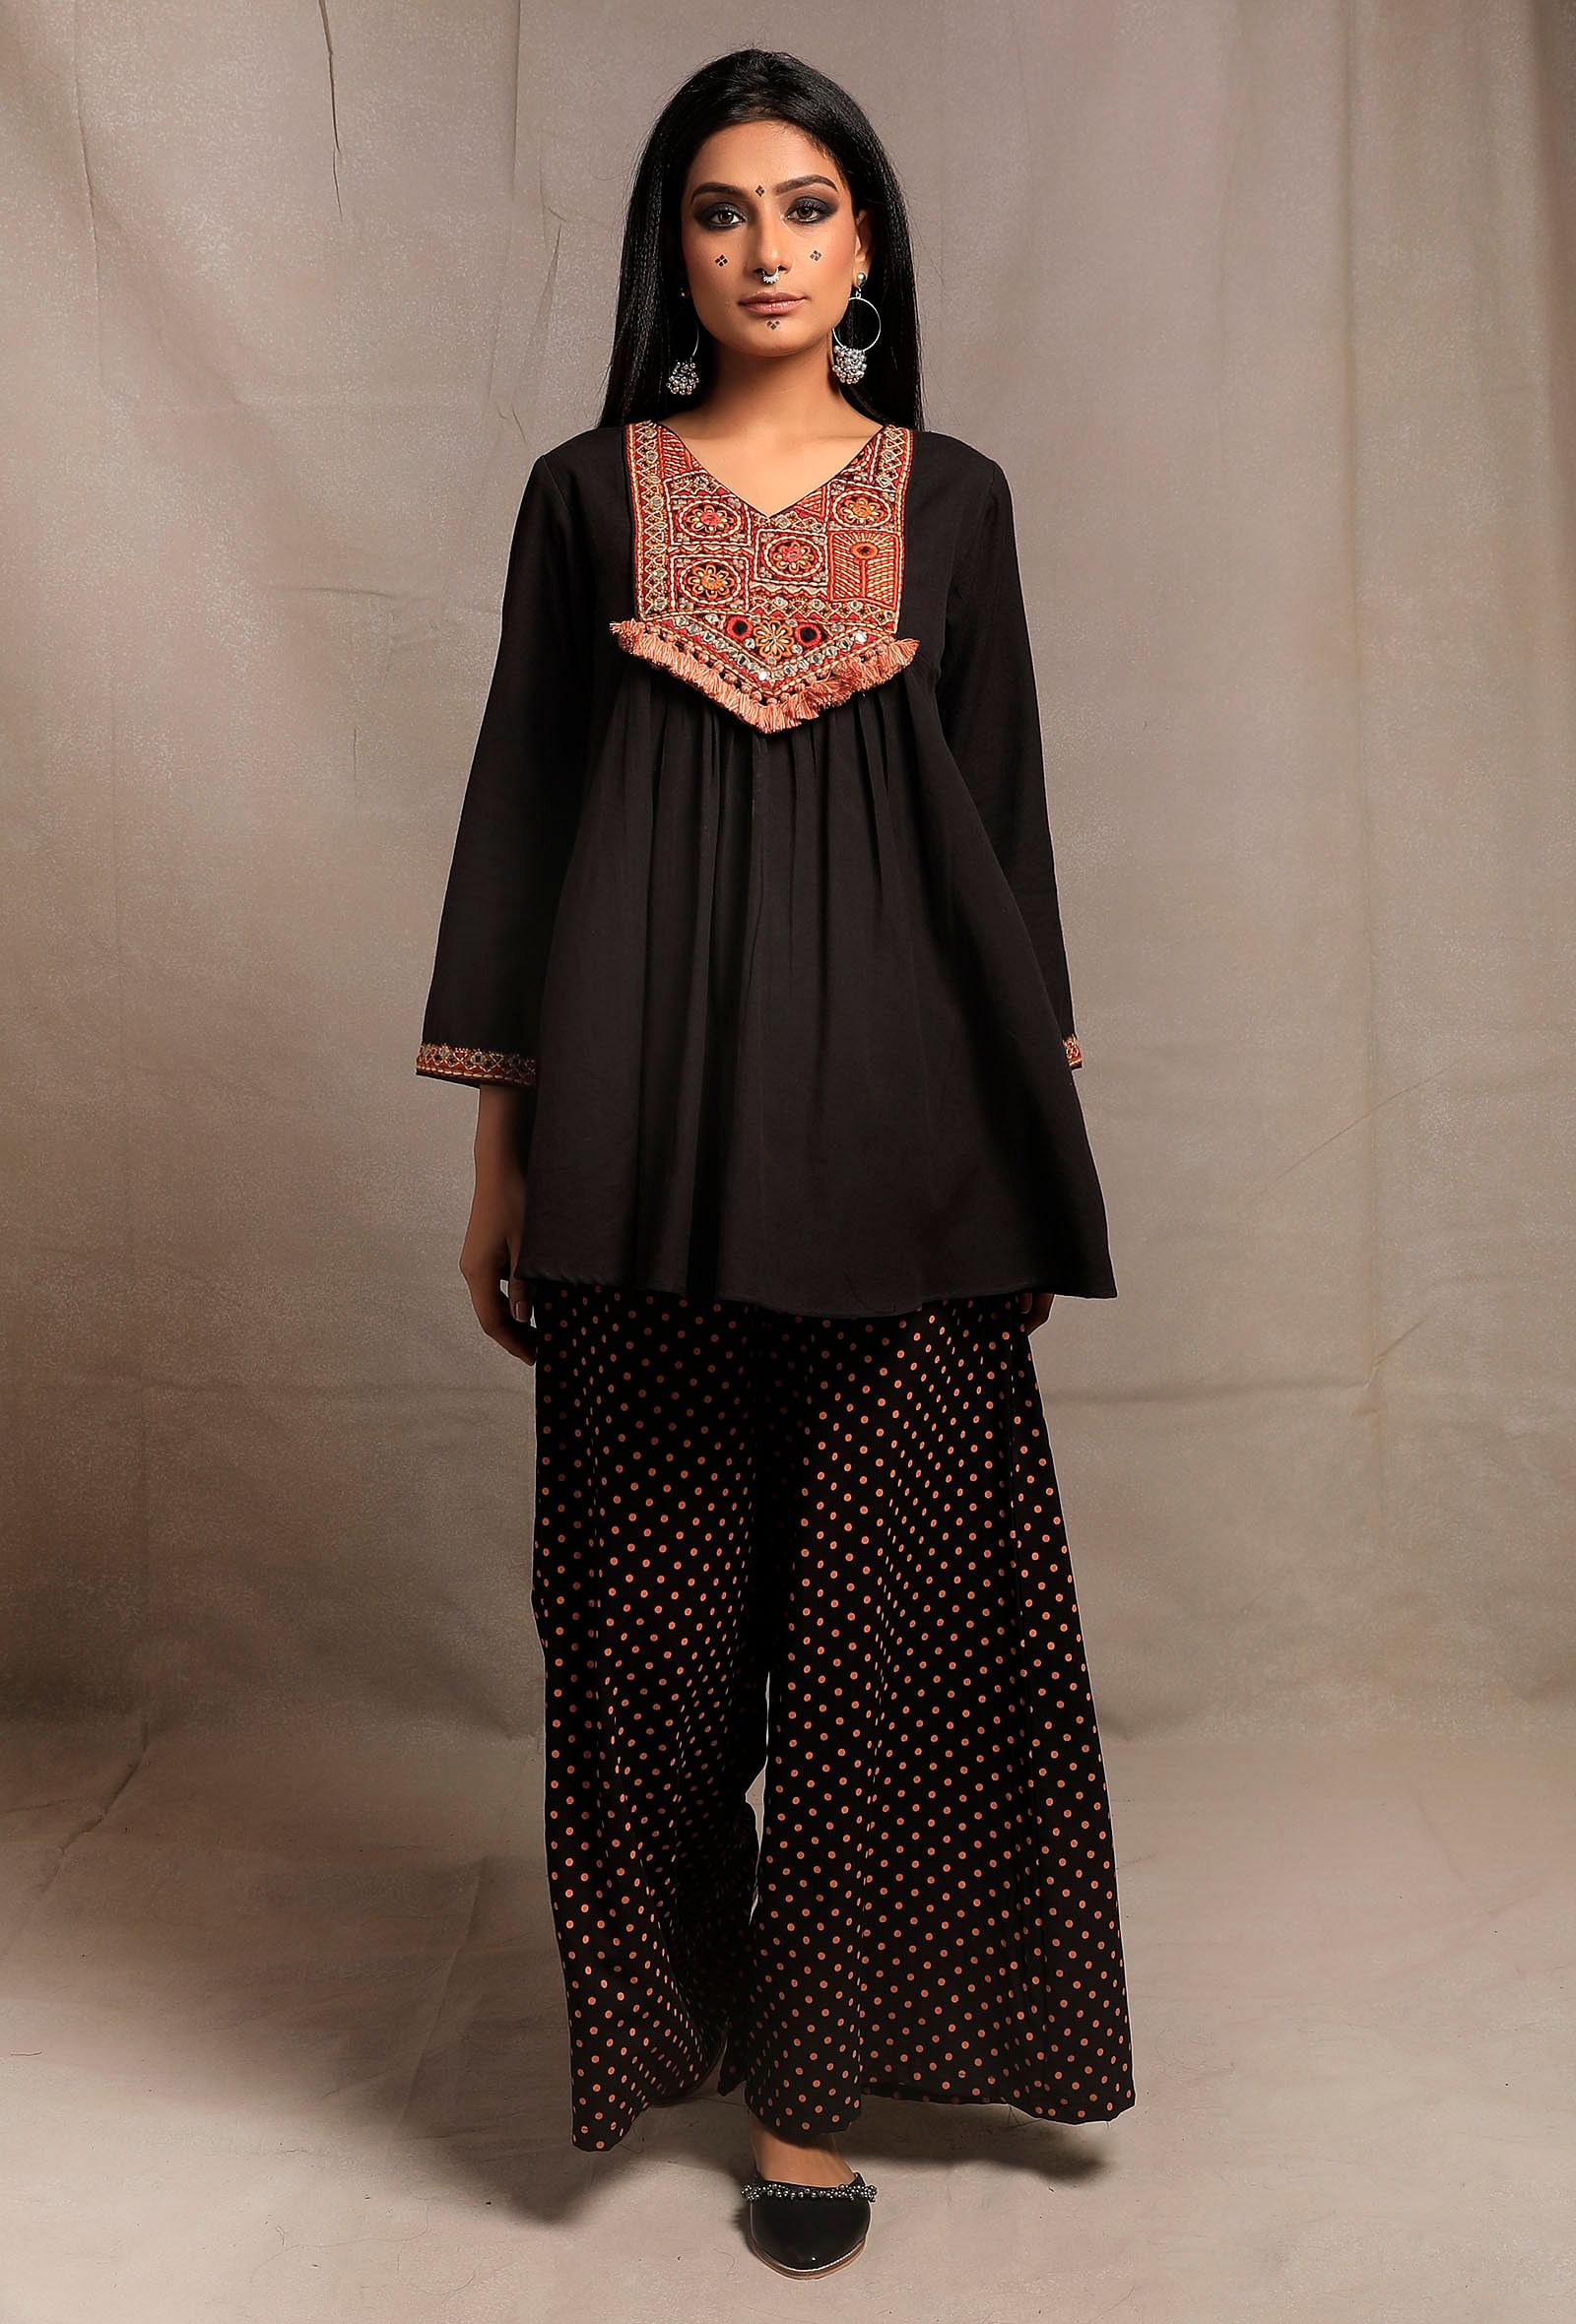 Hina Khan in Kalki Apricot Orange Short Kurta Suit In Cotton Silk With  Flared Palazzo Pants | Mehendi outfits, Dress indian style, Indian fashion  dresses